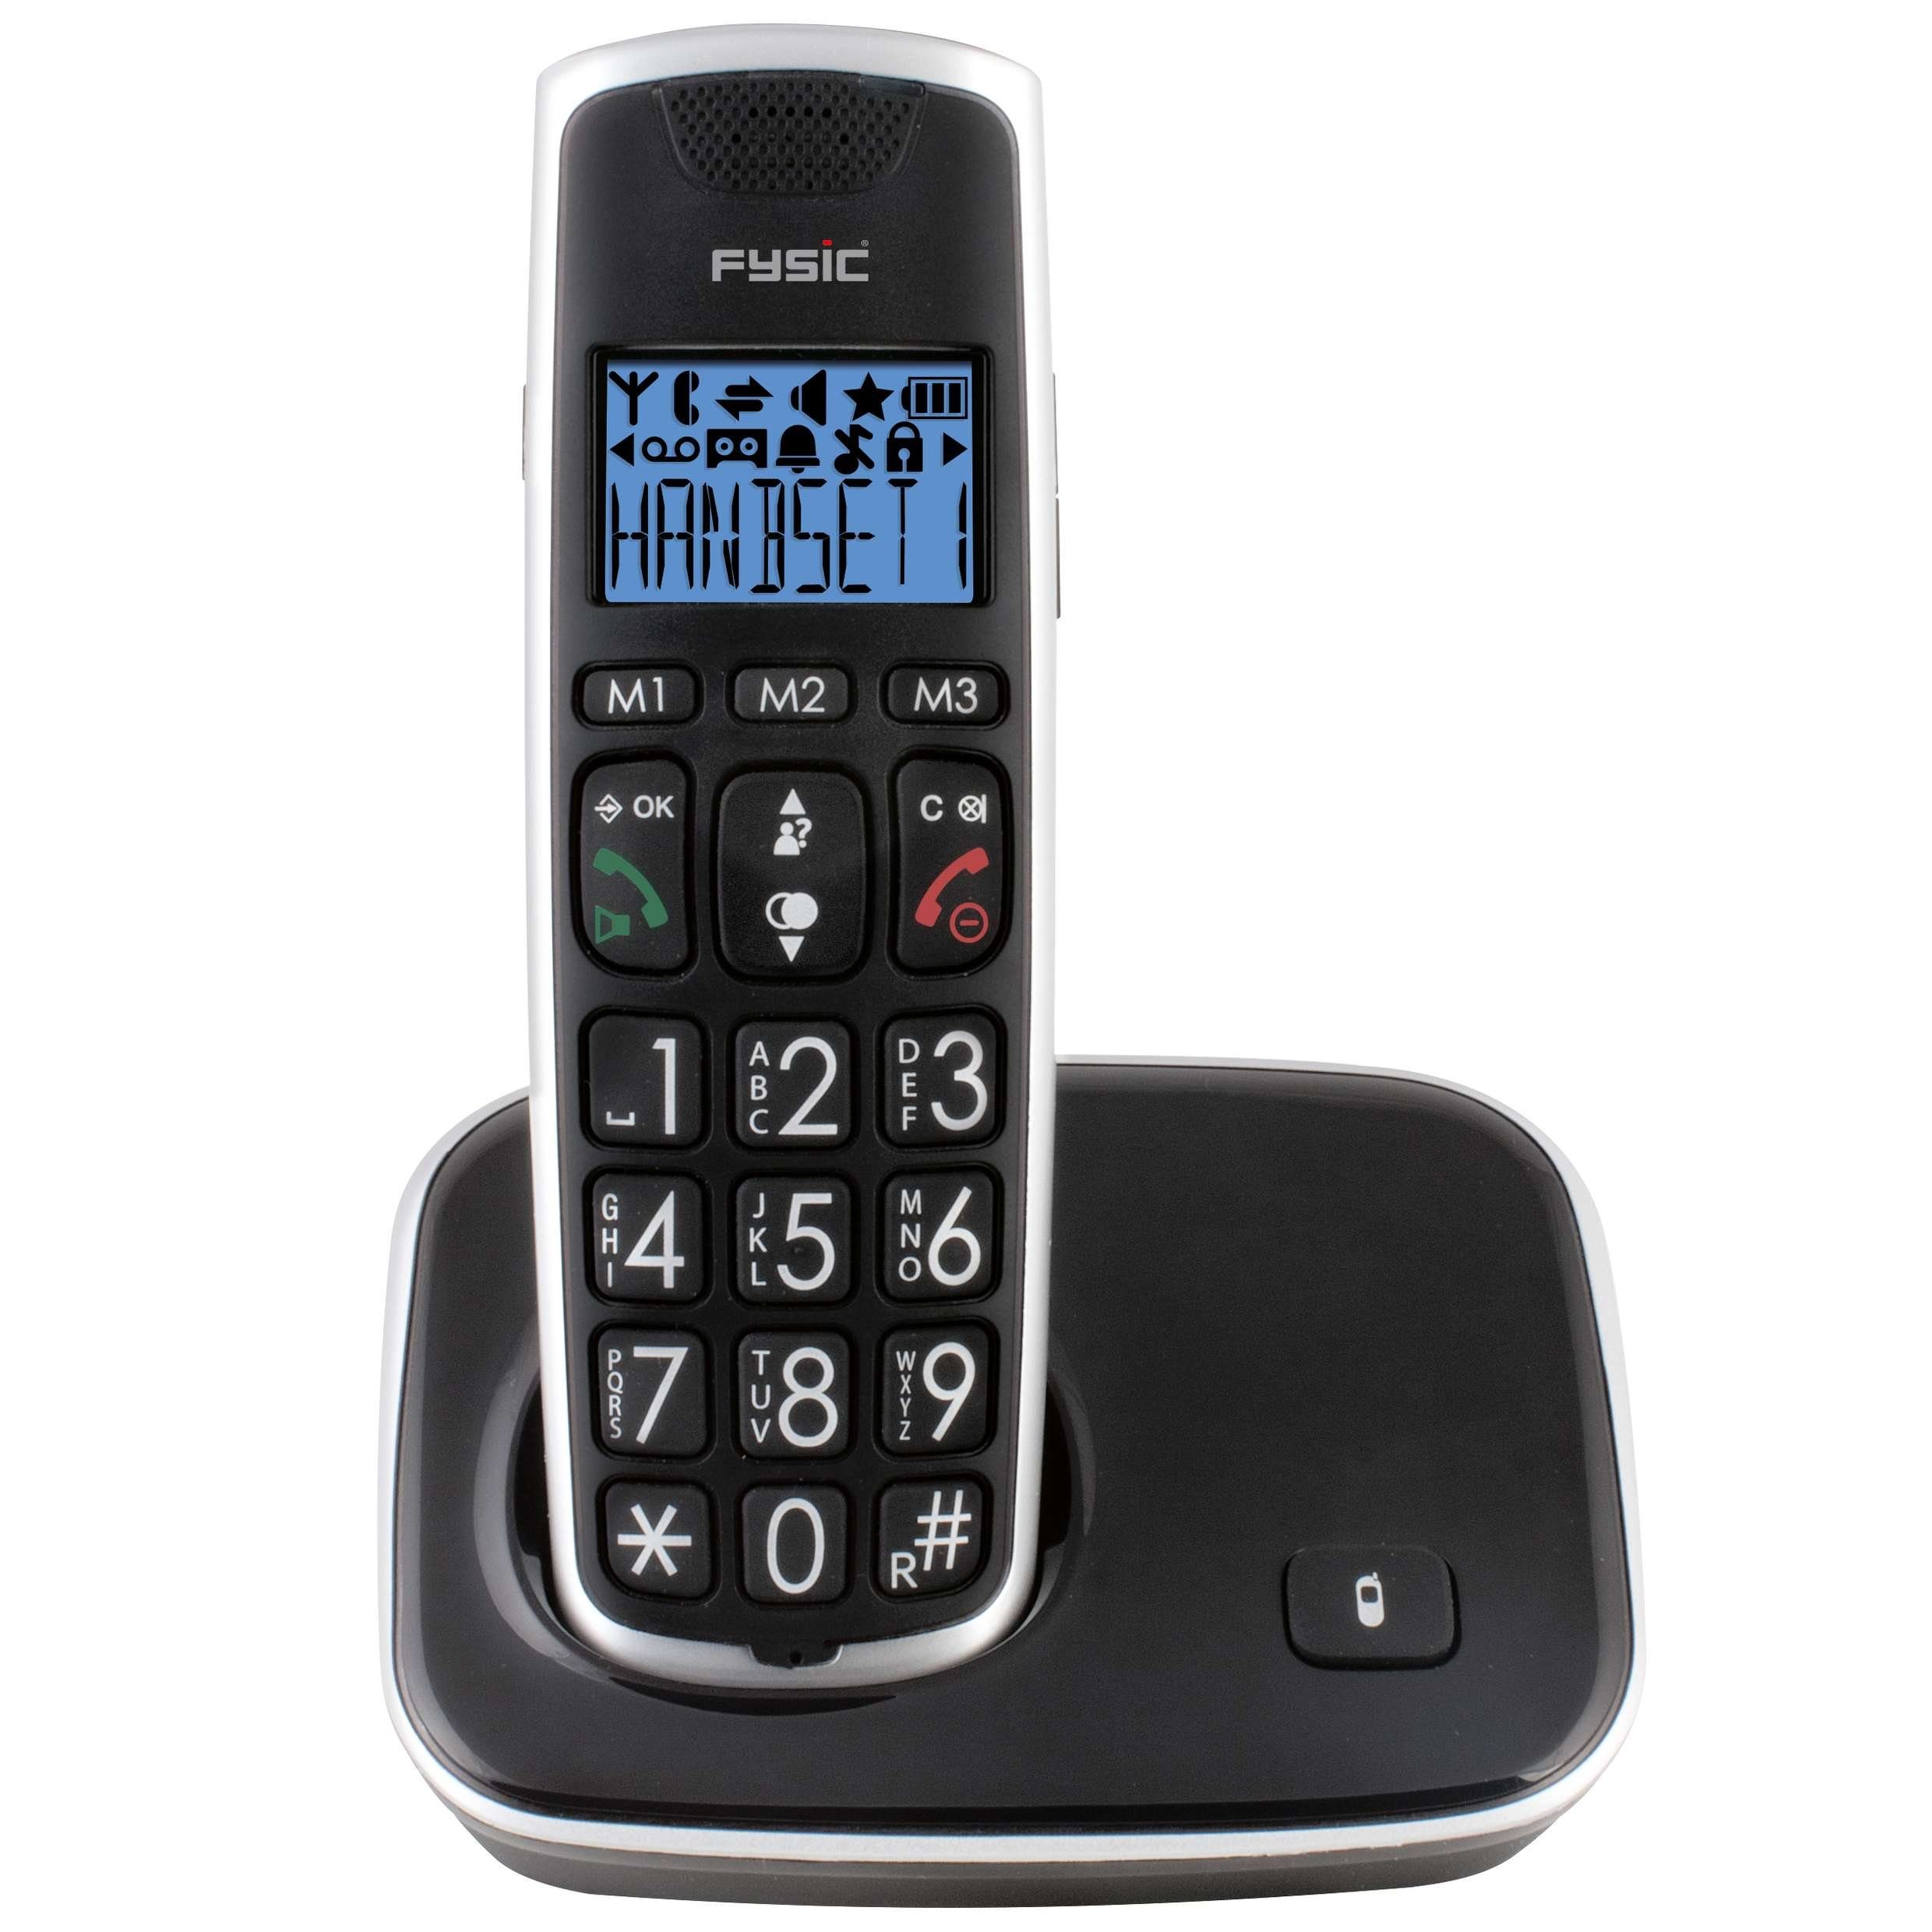 (Mobilteile: FX-6020 Hörgerätkompatibel, Fysic 2, DECT-Telefon Display) große Tasten, Schnurloses großes